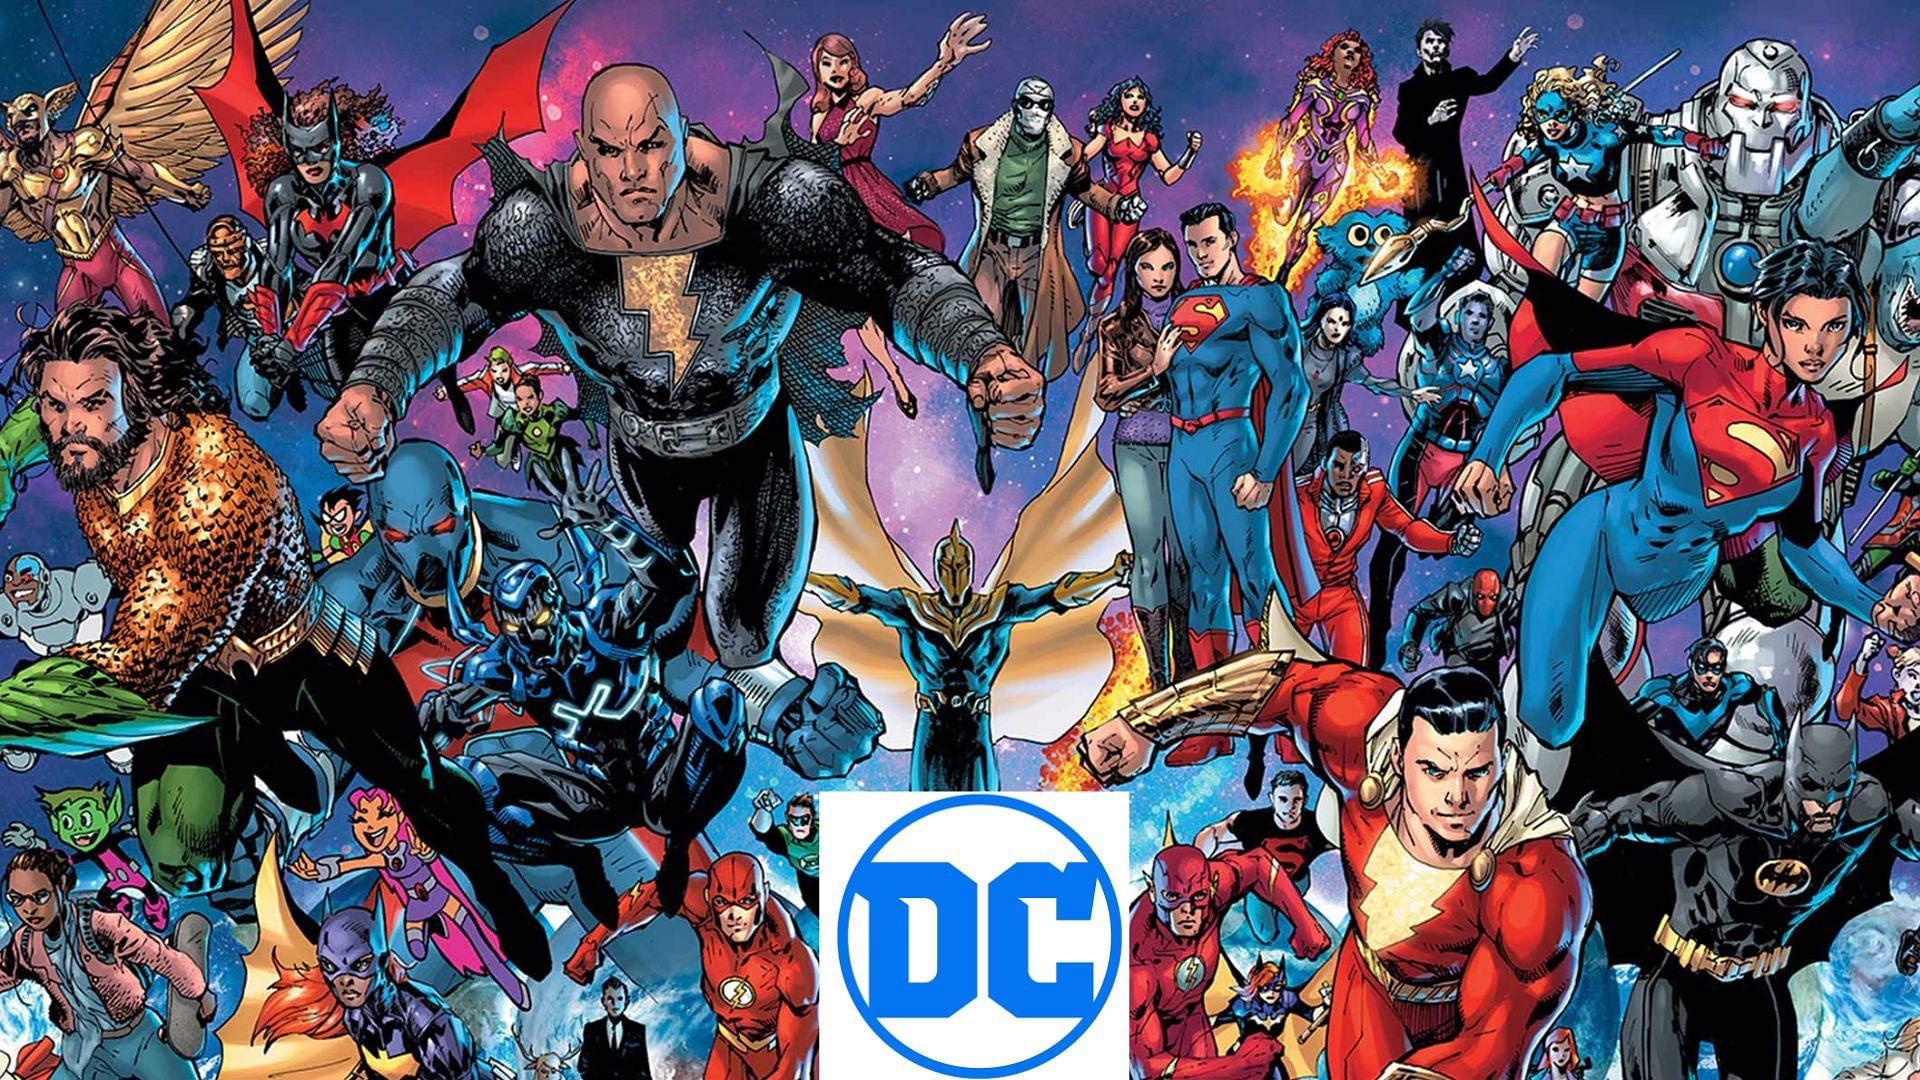 DC Comics is part of the DC Company (Image via DC)